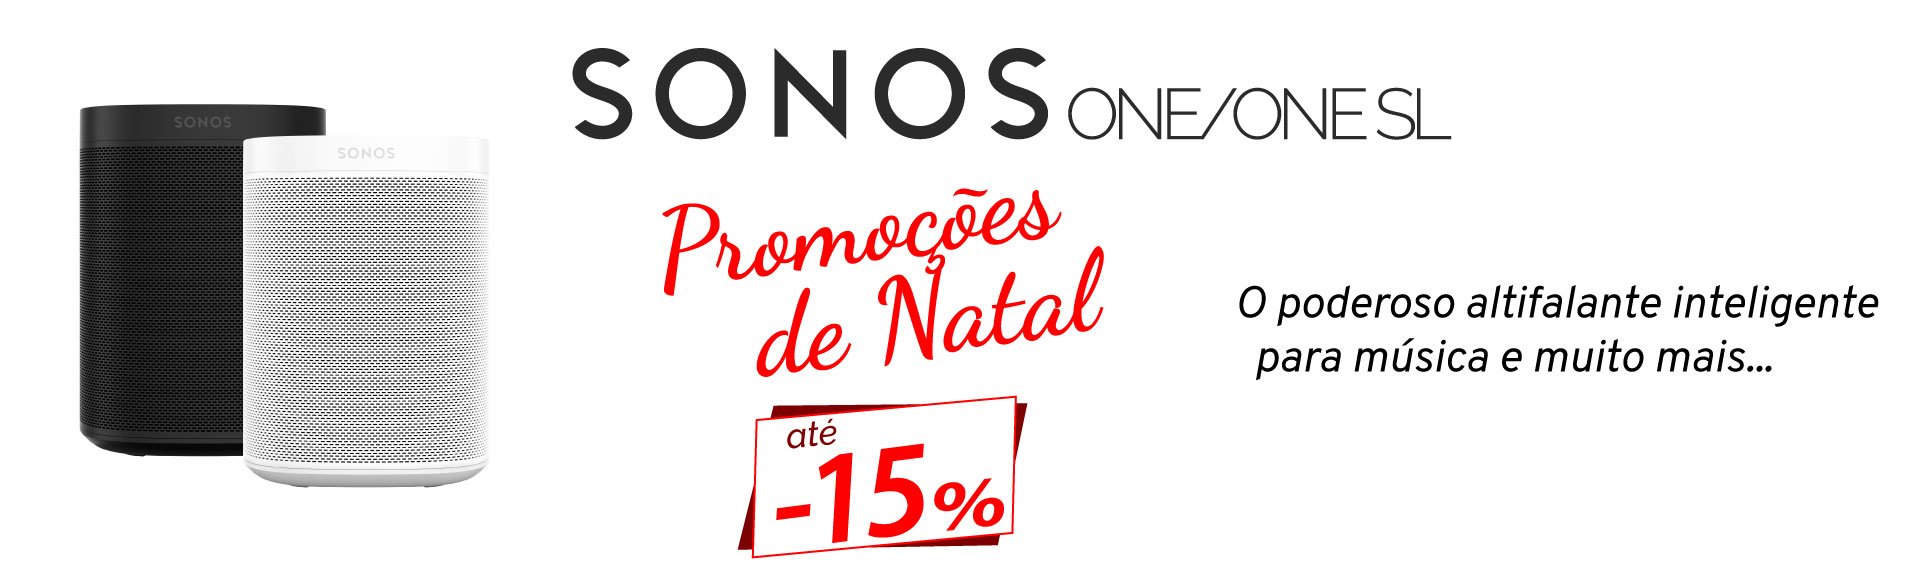 Sonos One/One SL